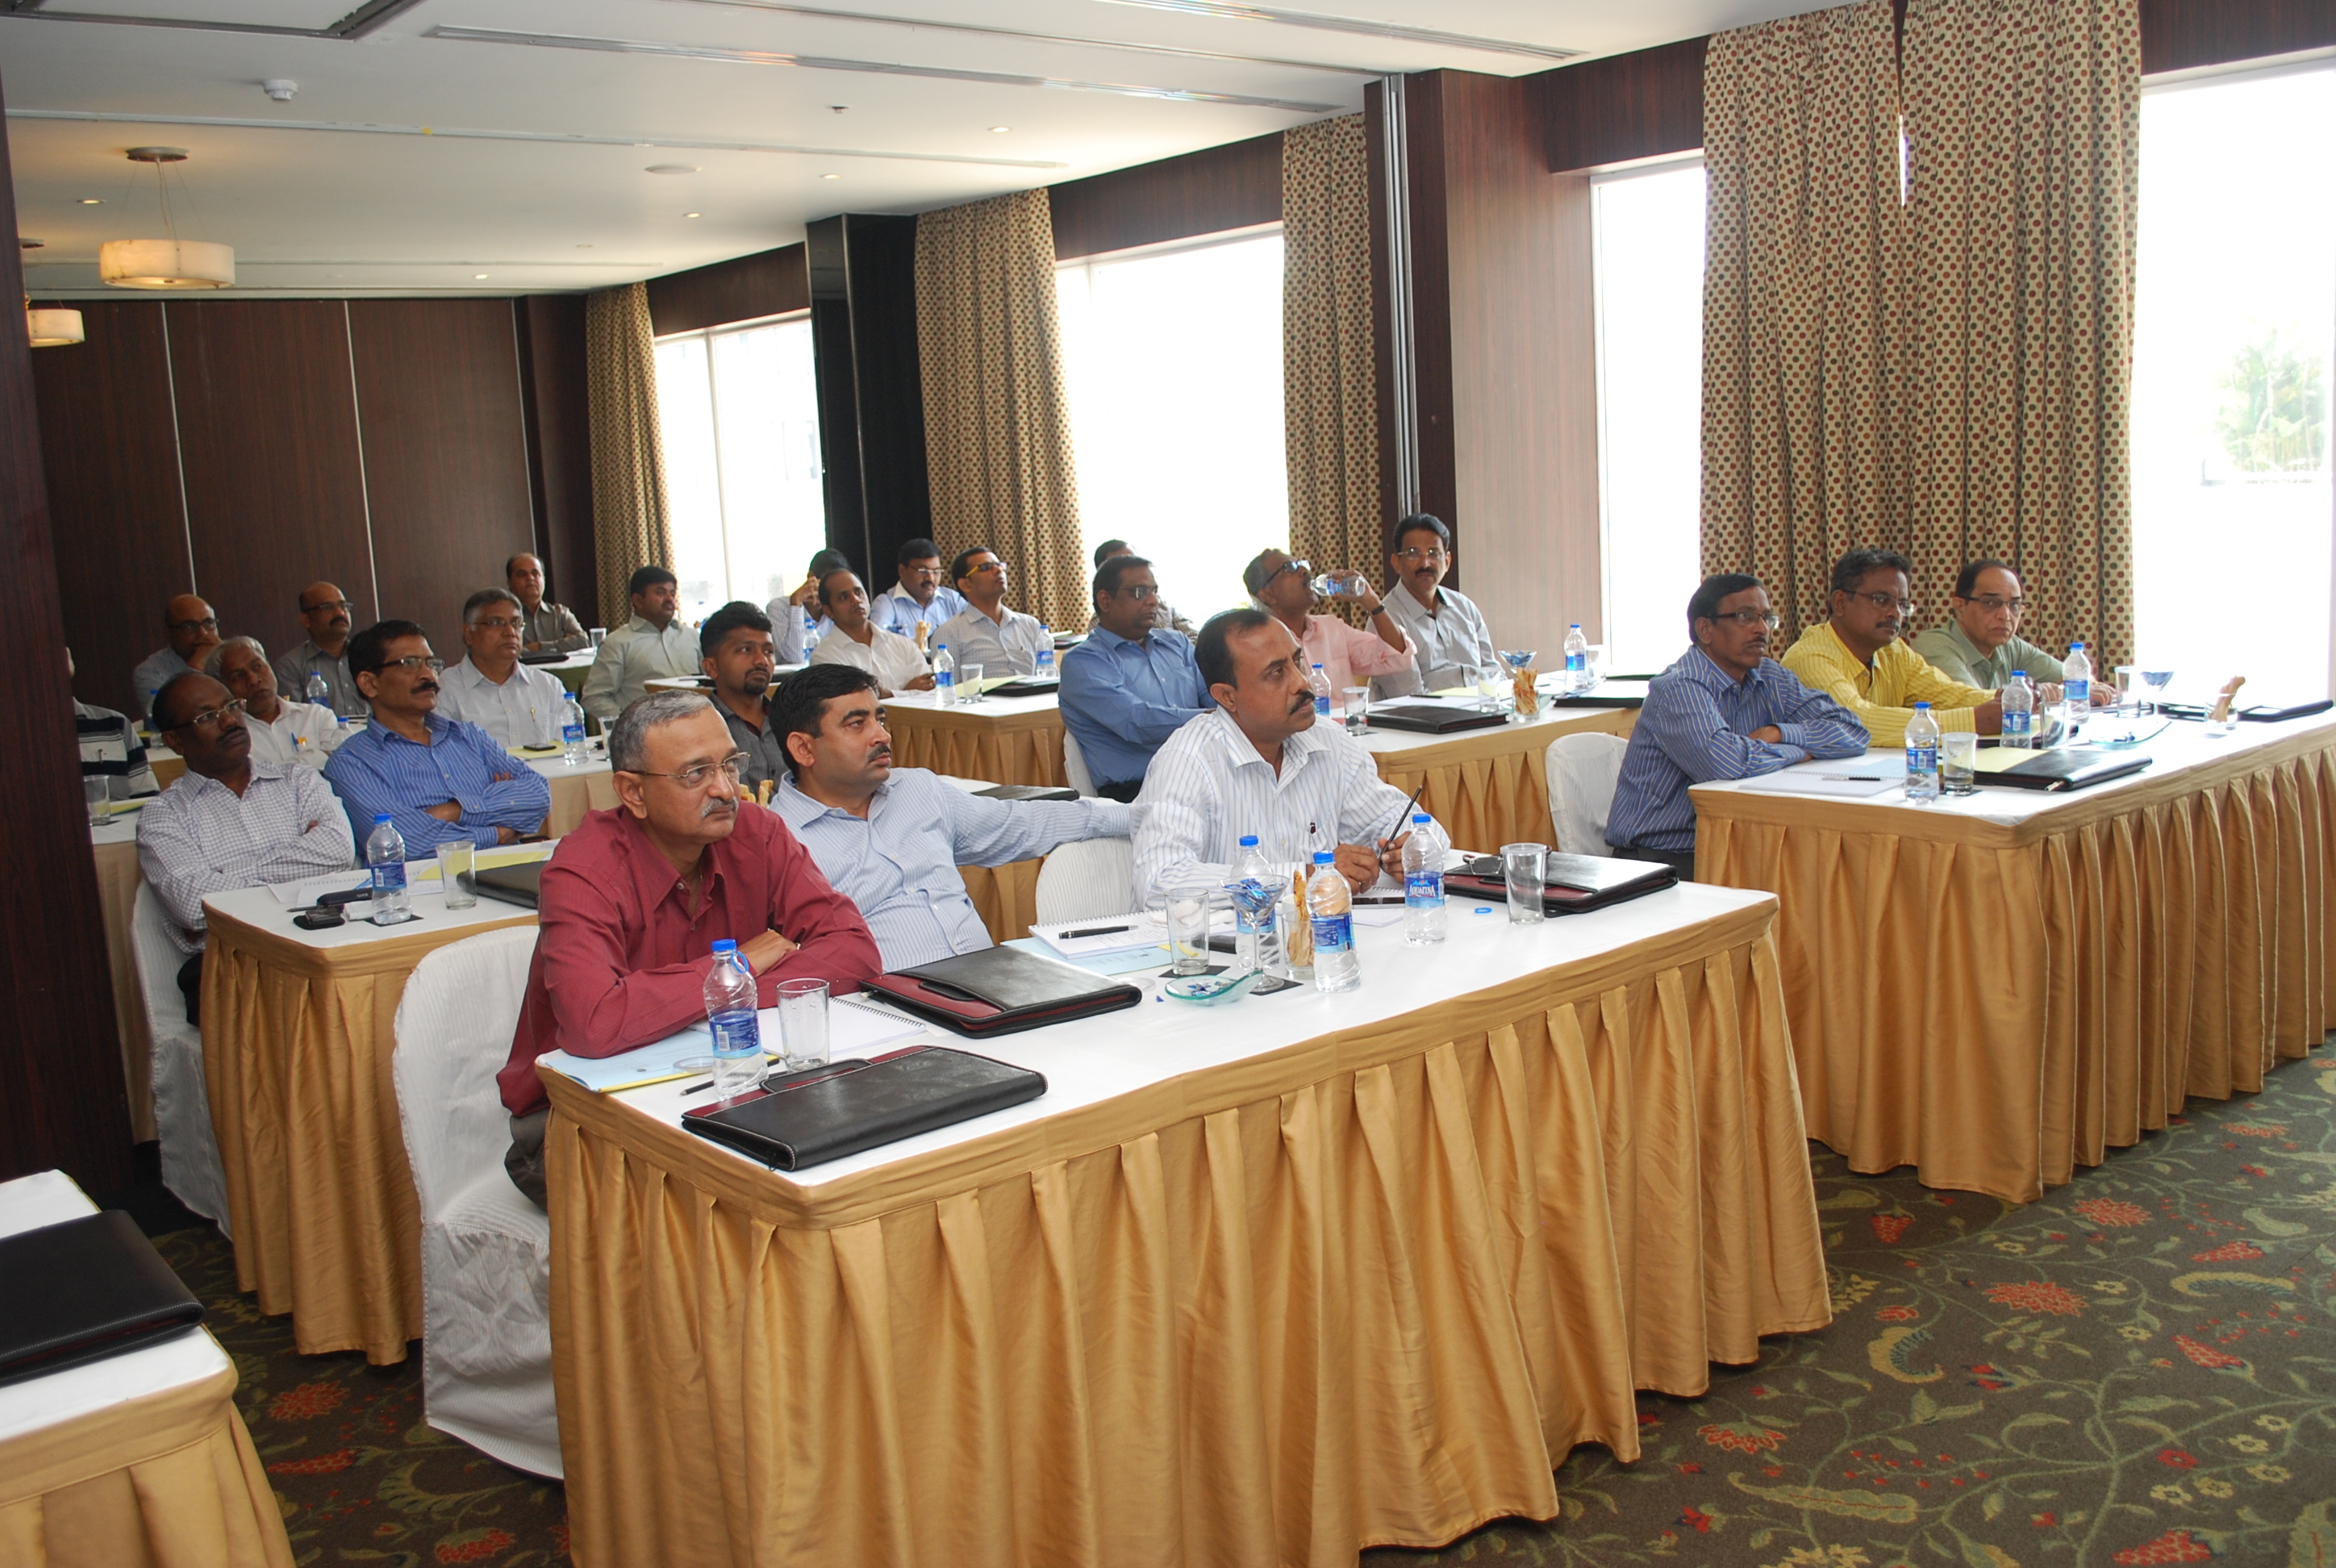 Full attention during the Februar 2015 seminar on Port Management